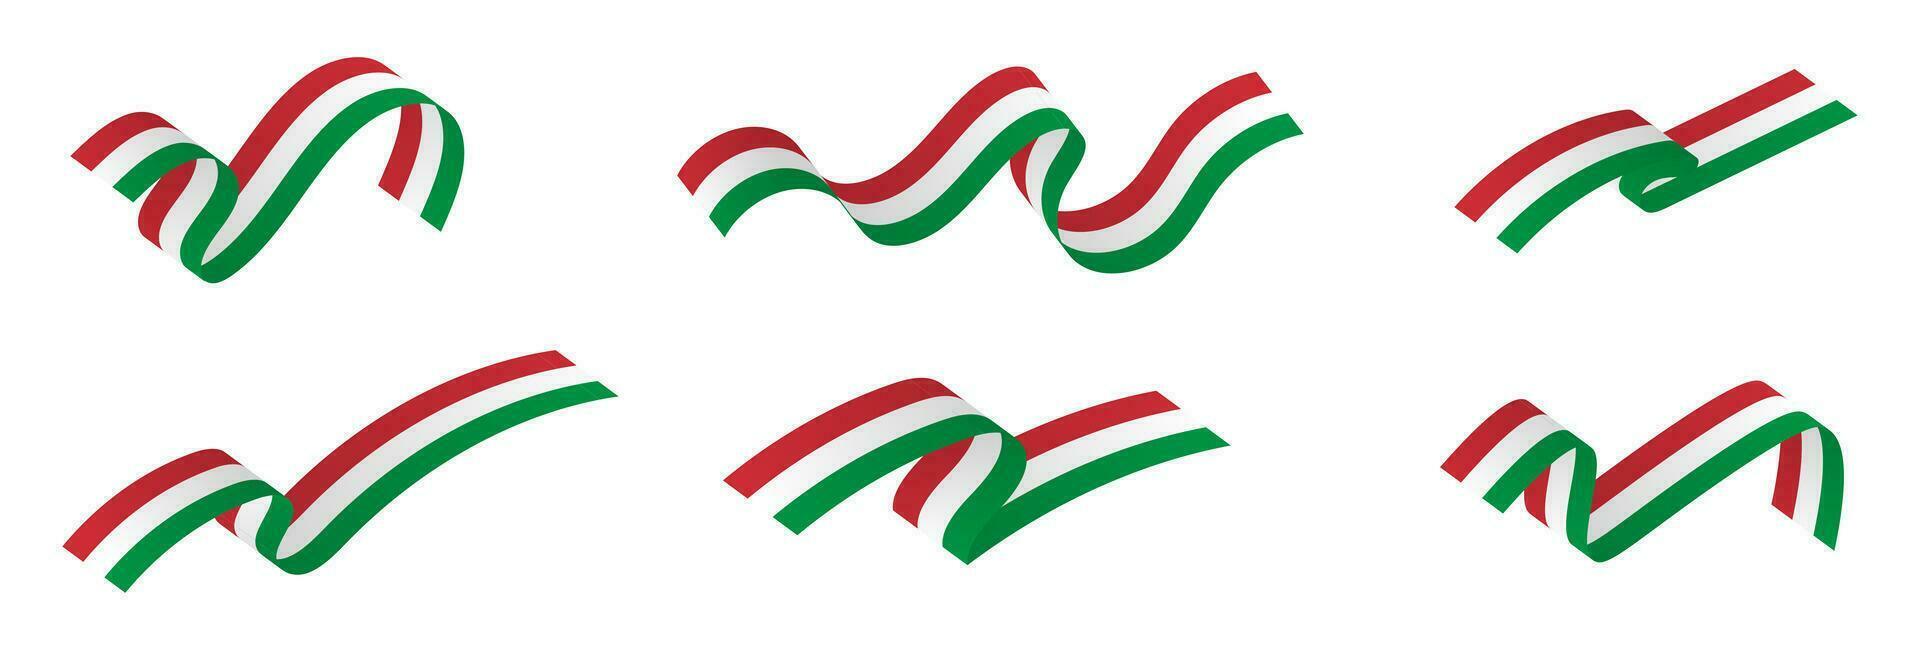 3d Italy Flag Ribbons. Long Italian flags, italy tri-color flag. Italian Flag ribbons isolated on white background. Editable Vector Illustration. EPS 10.